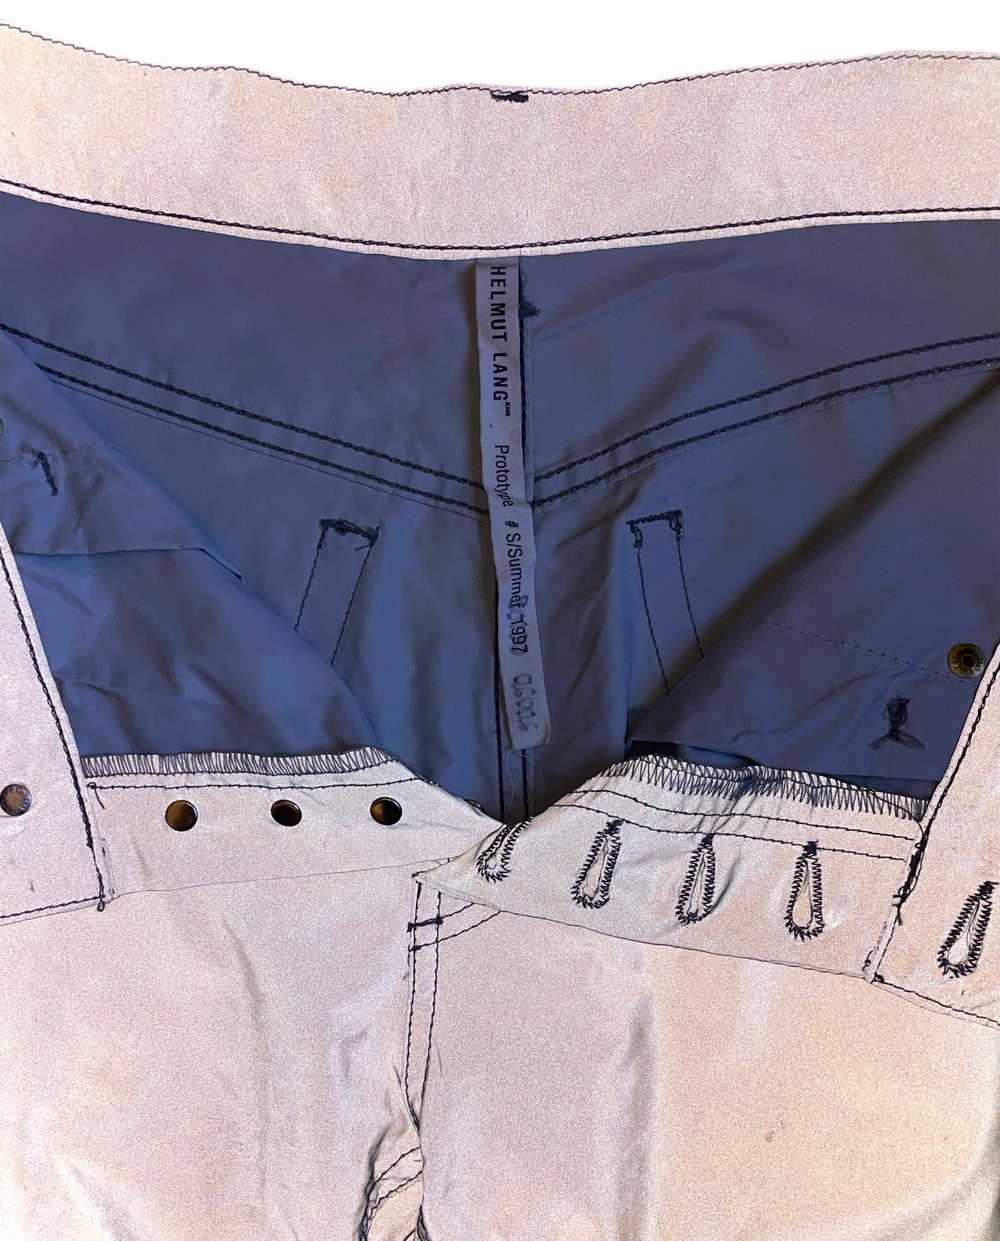 S/S 1997 Helmut Lang Reflective Pants - image 5